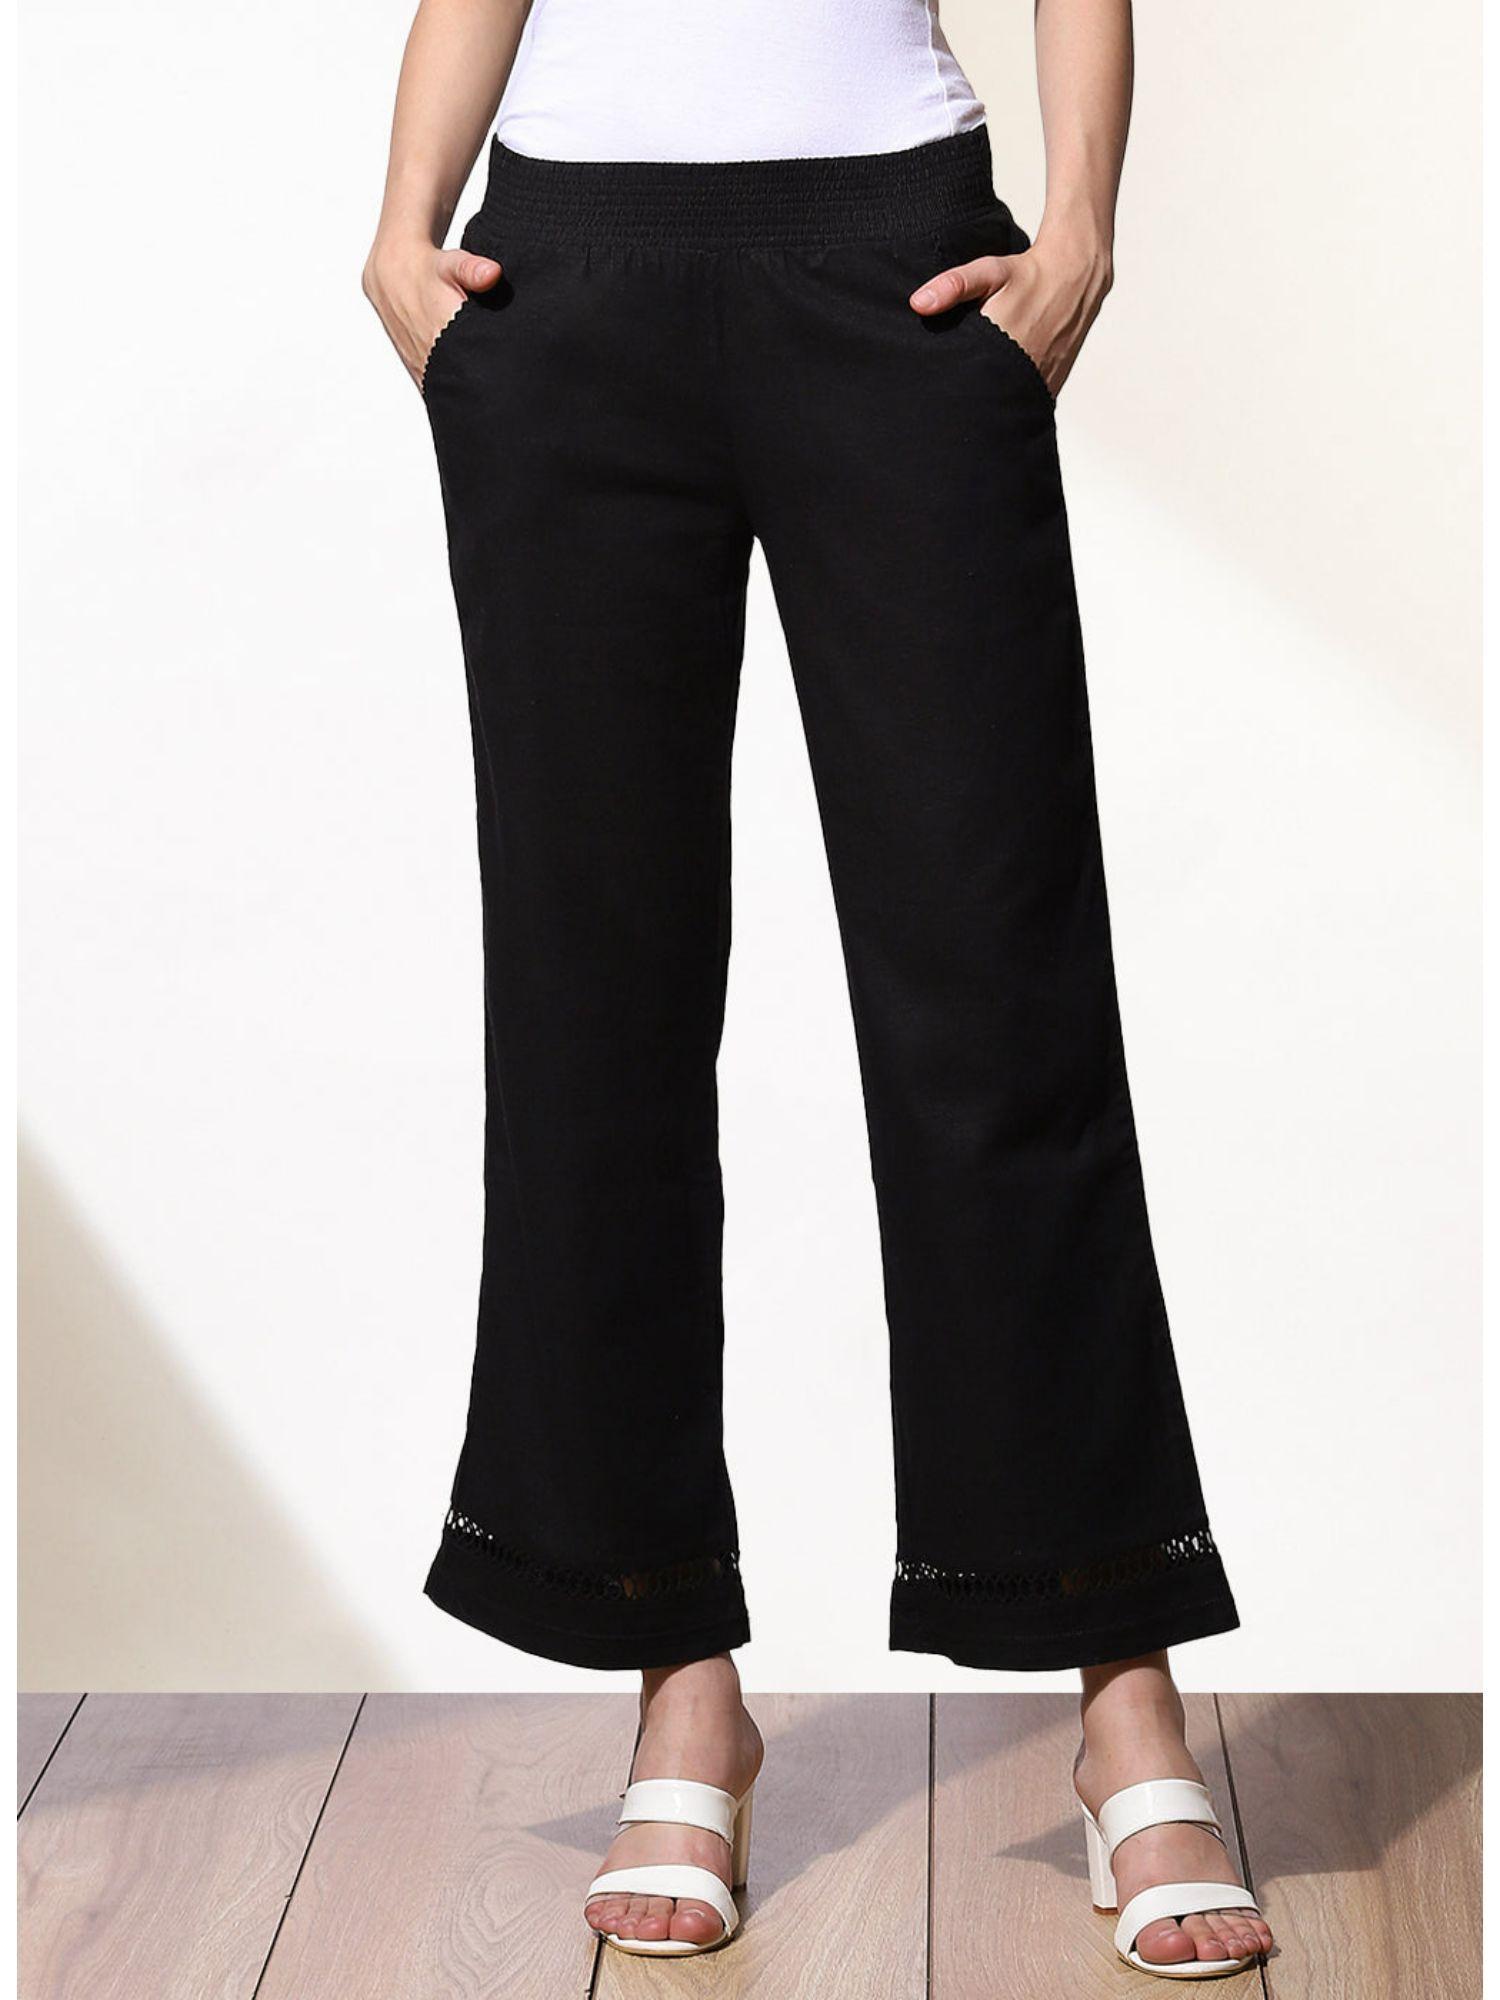 subtle black trousers with bell hem